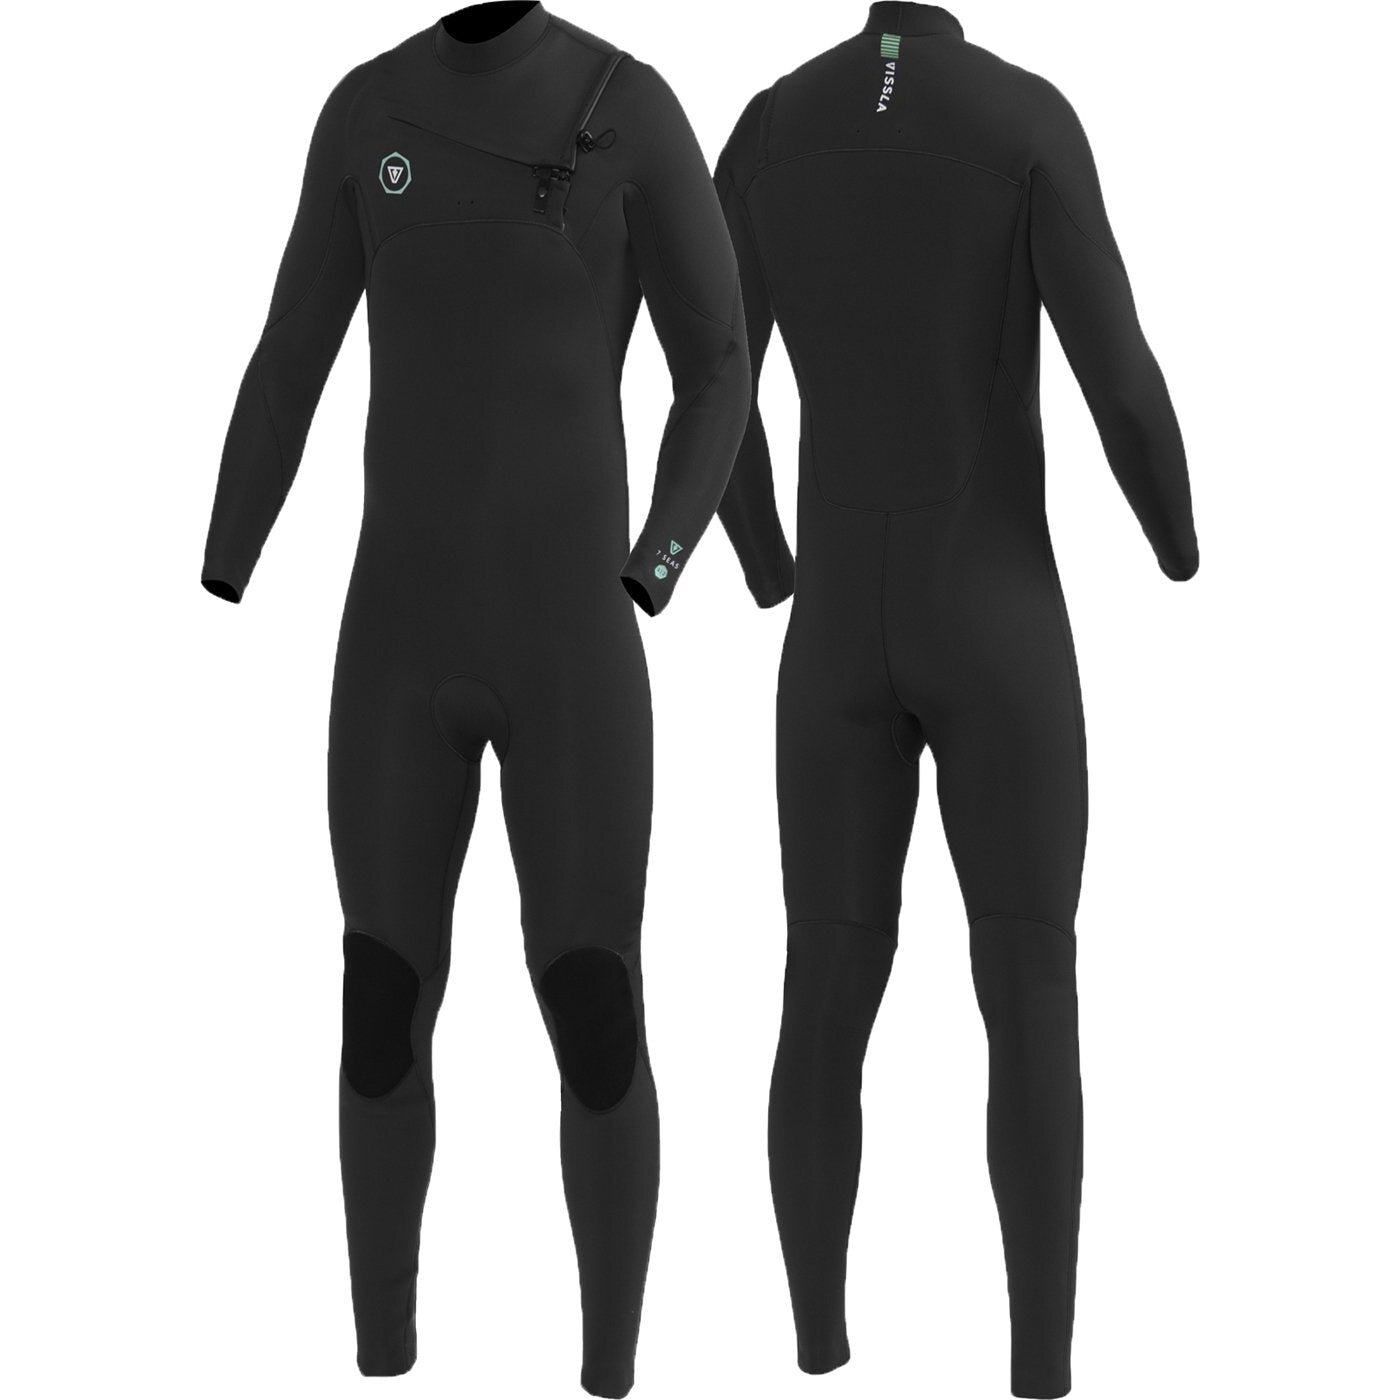 VIssla 7 seas 3-2 full chest zip wetsuit - black